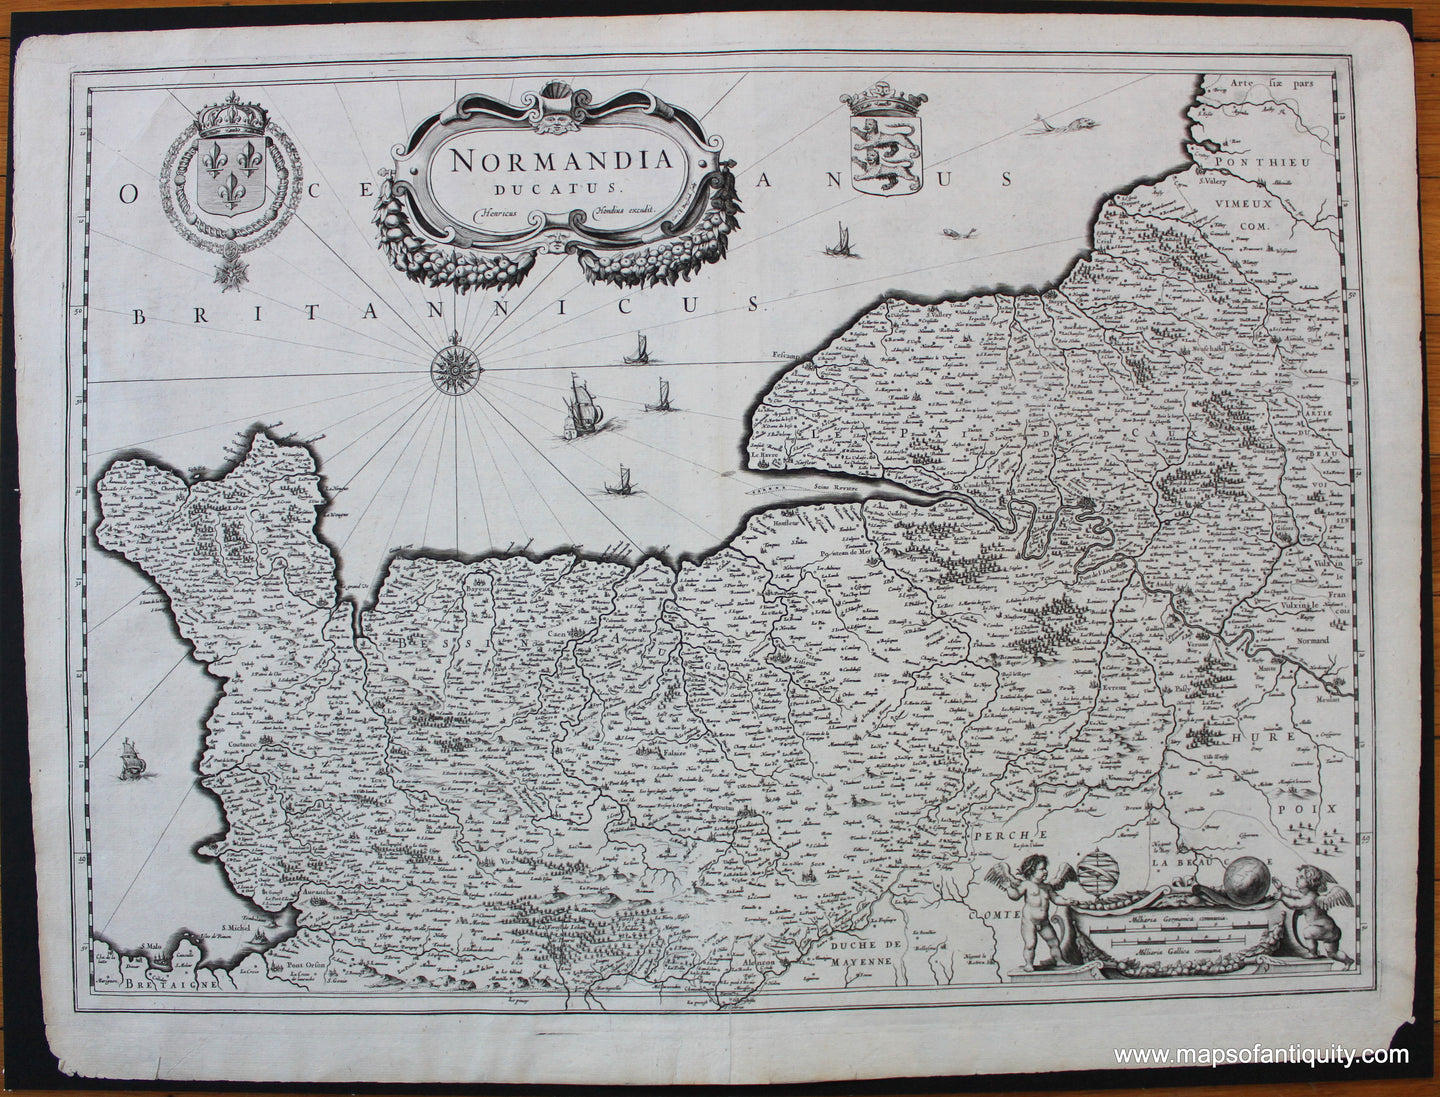 1640 - Normandy, France - Normandia Ducatus - Antique Map